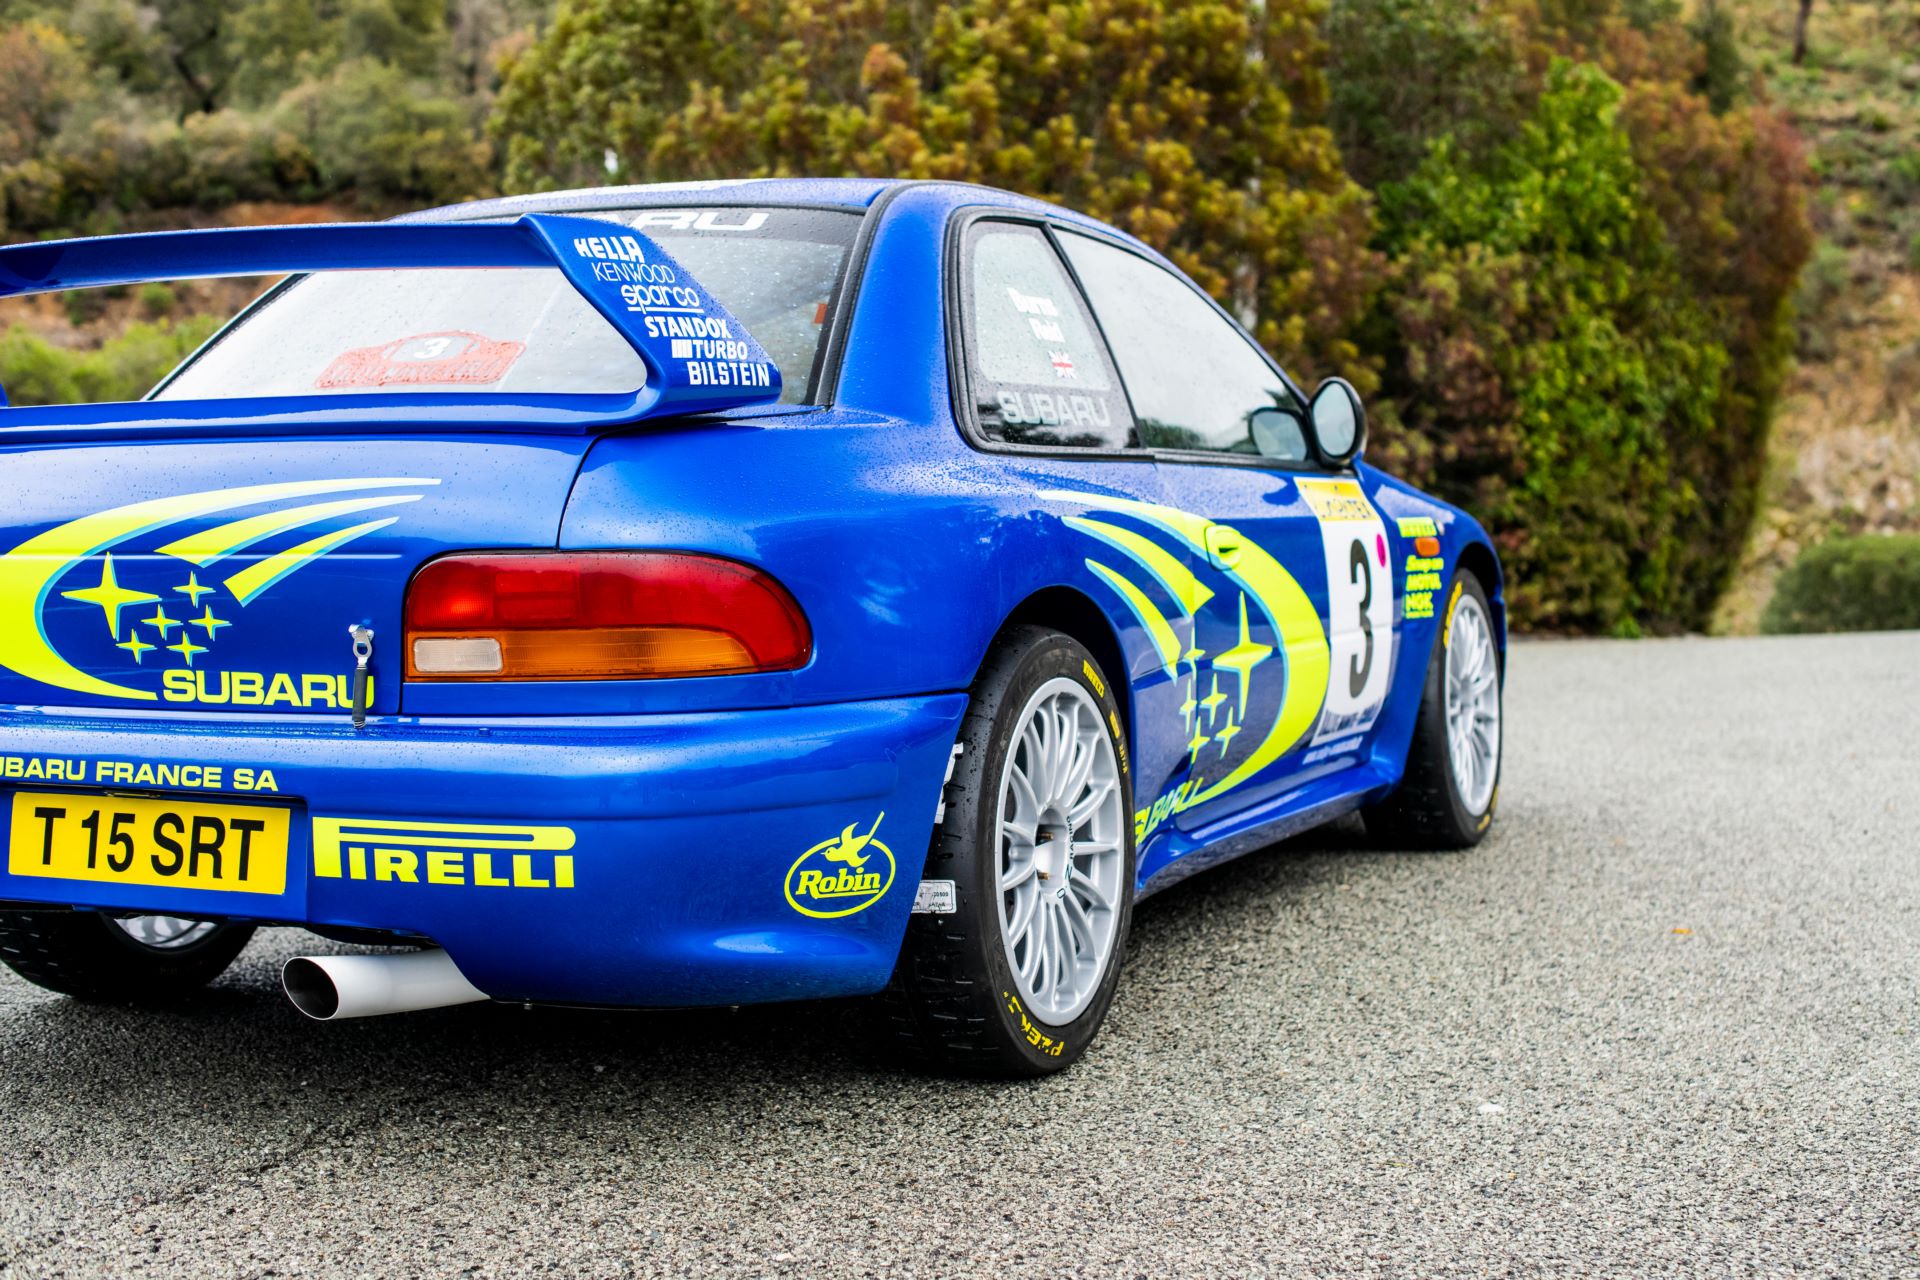 Subaru-Impreza-WRC-Richard-Burns-auction-101